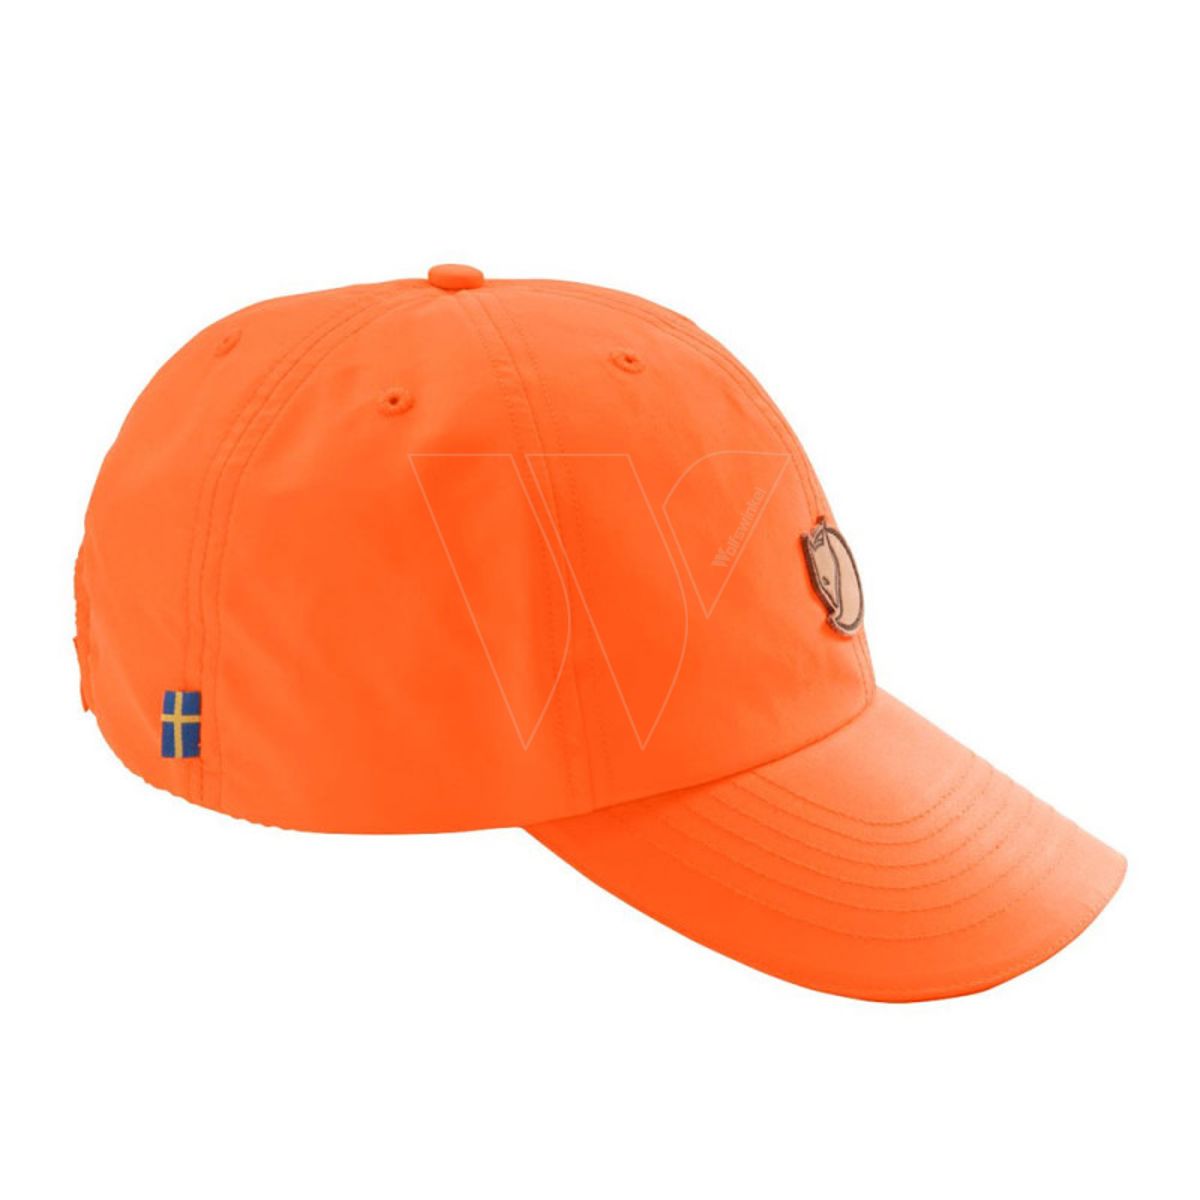 Fjallraven safety cap orange s/m